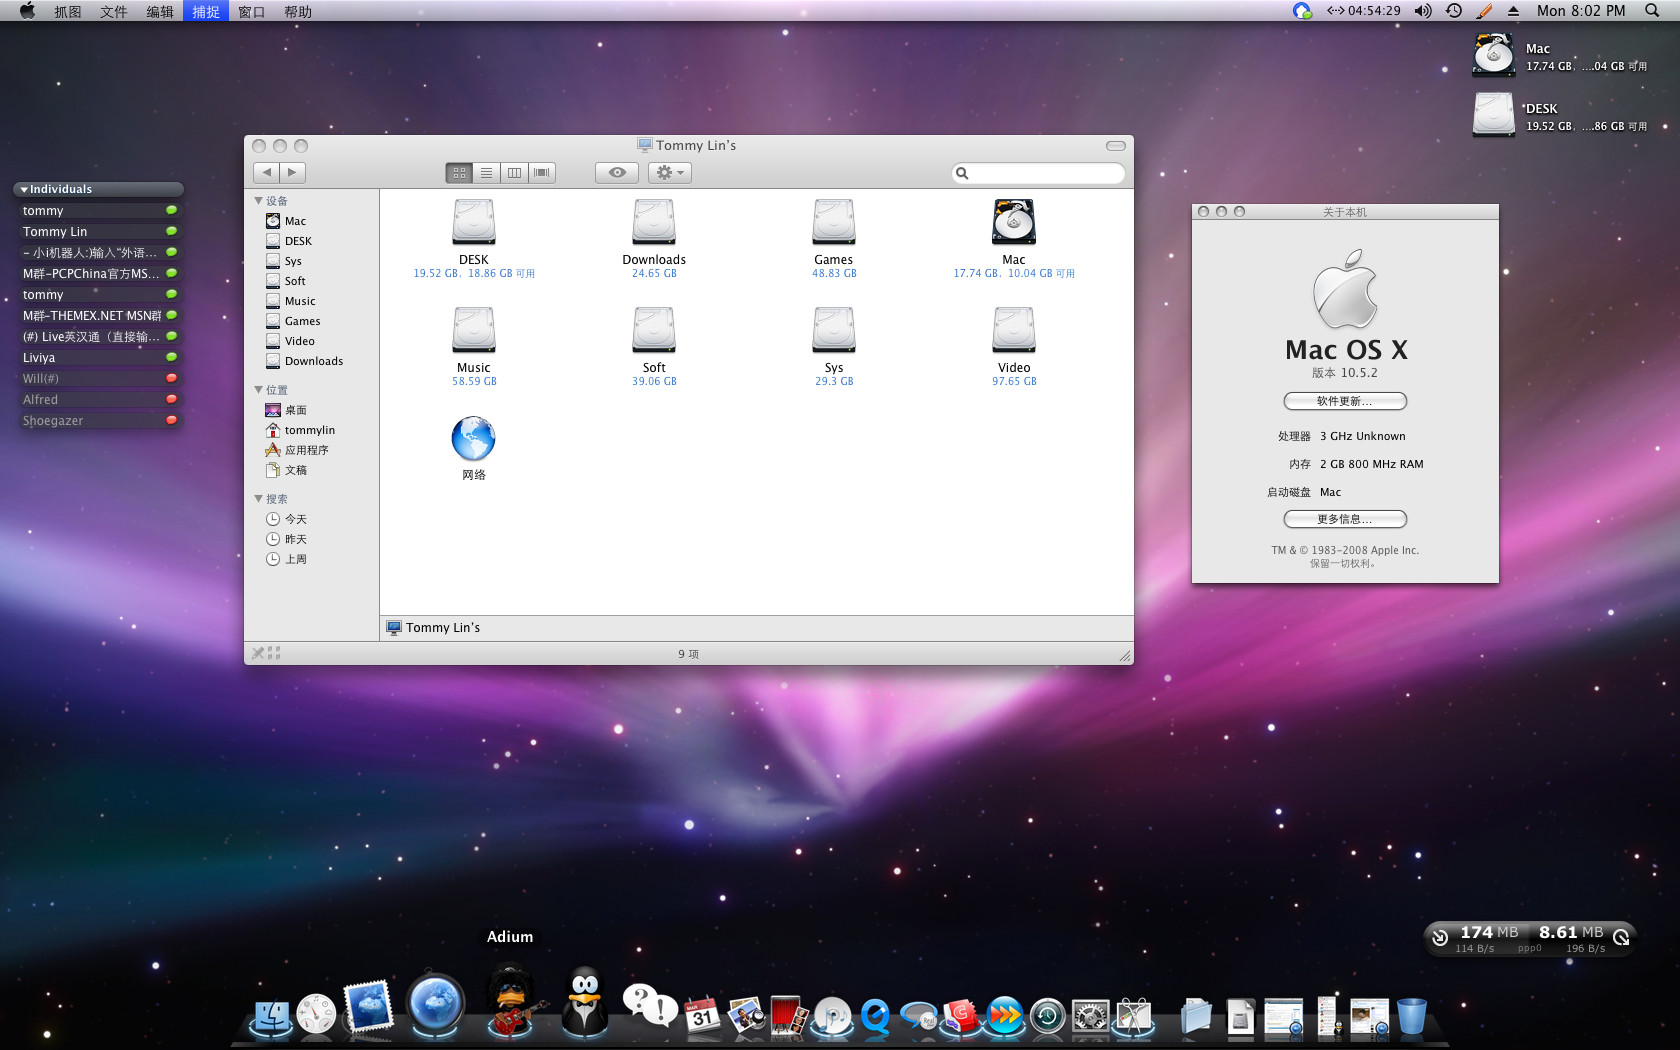 mac malwarebytes for mac os x 10.5.8